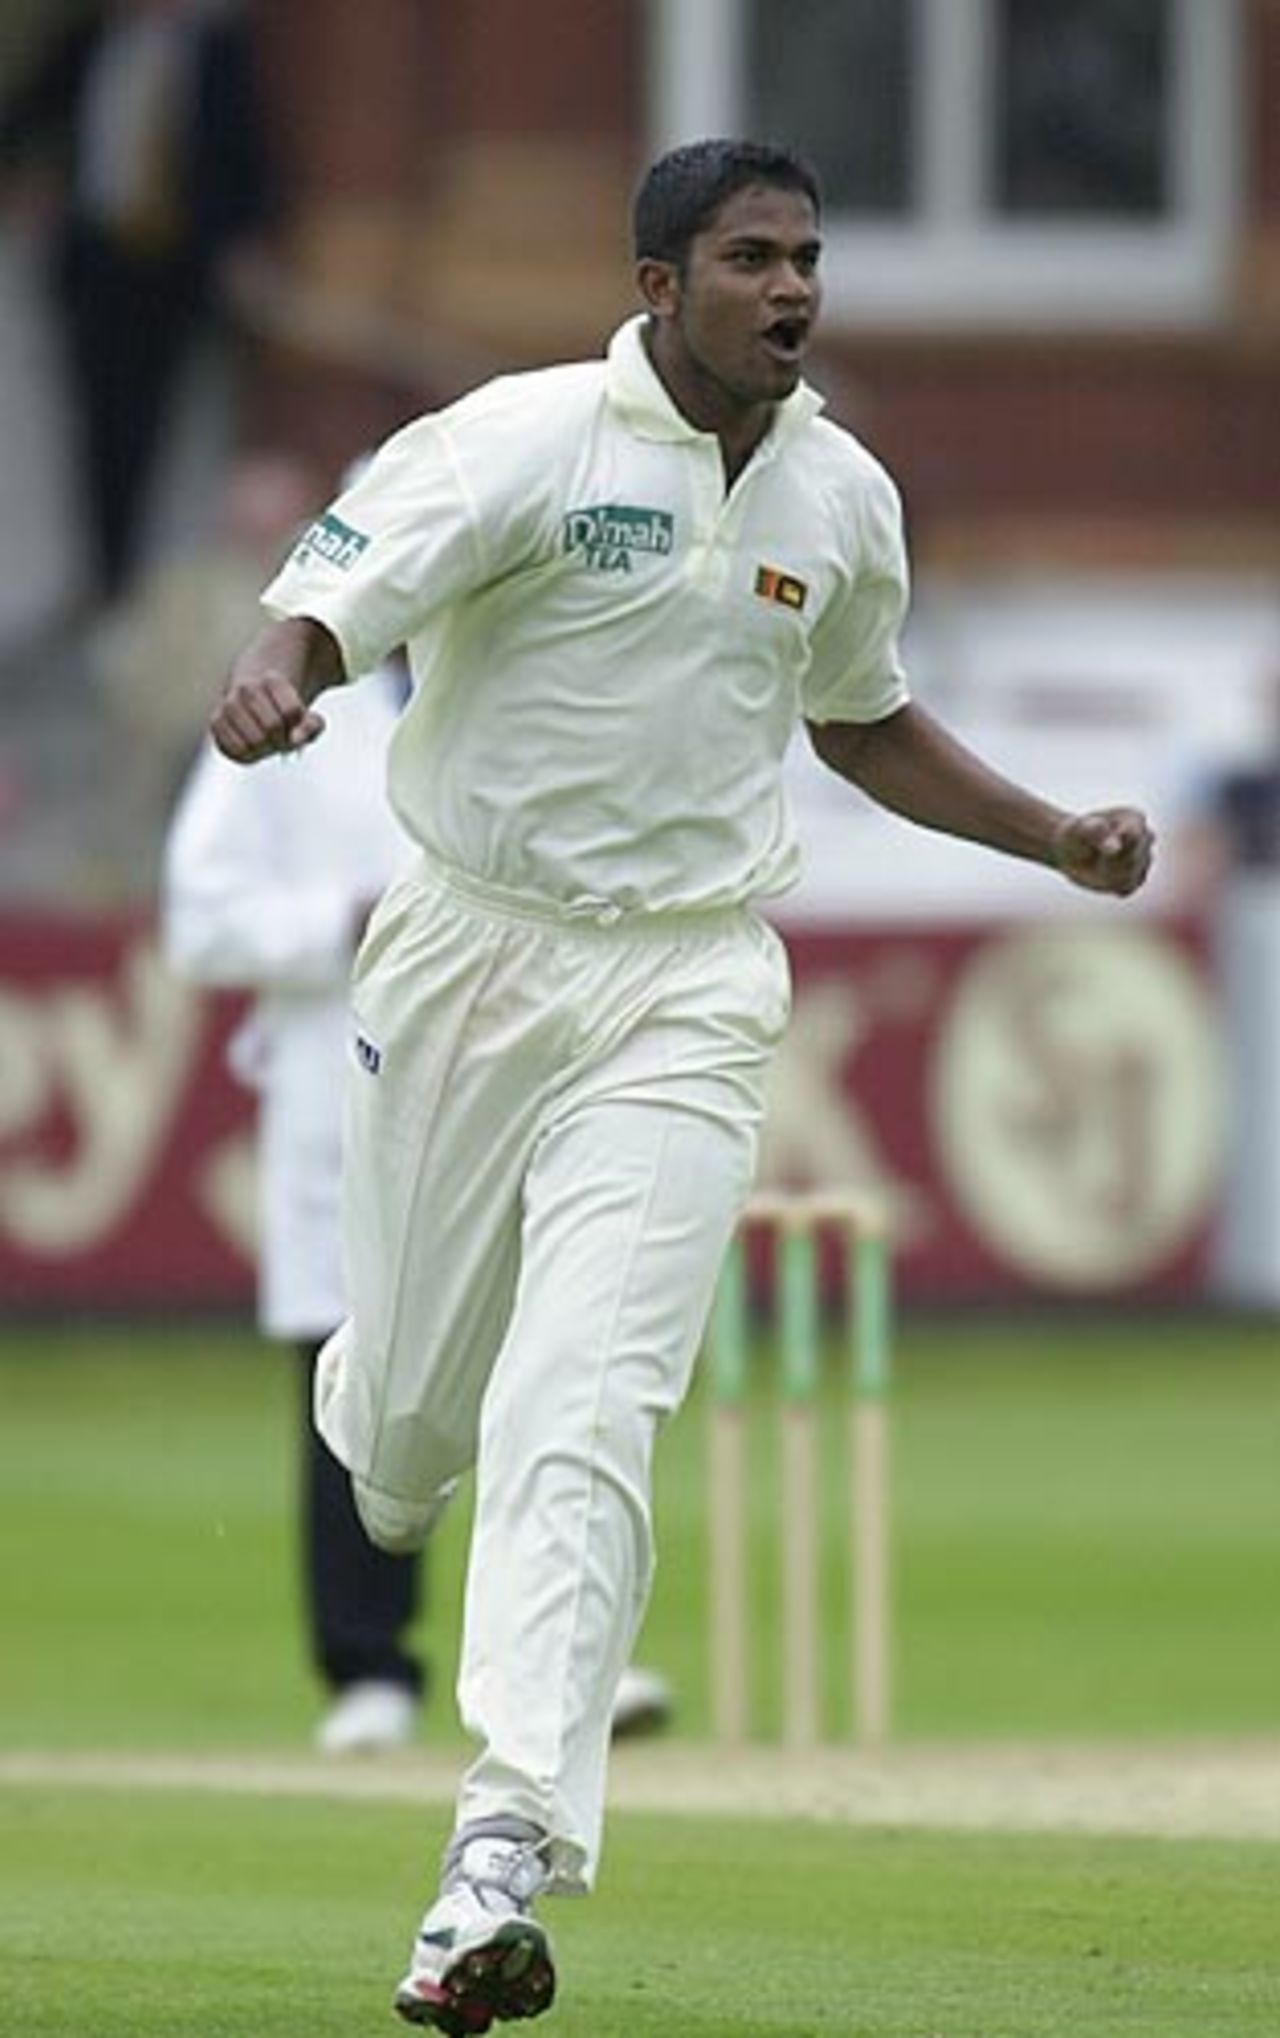 Nuwan Zoysa joyful at the wicket of Hussain, England v Sri Lanka, First Test, Lord's 2002